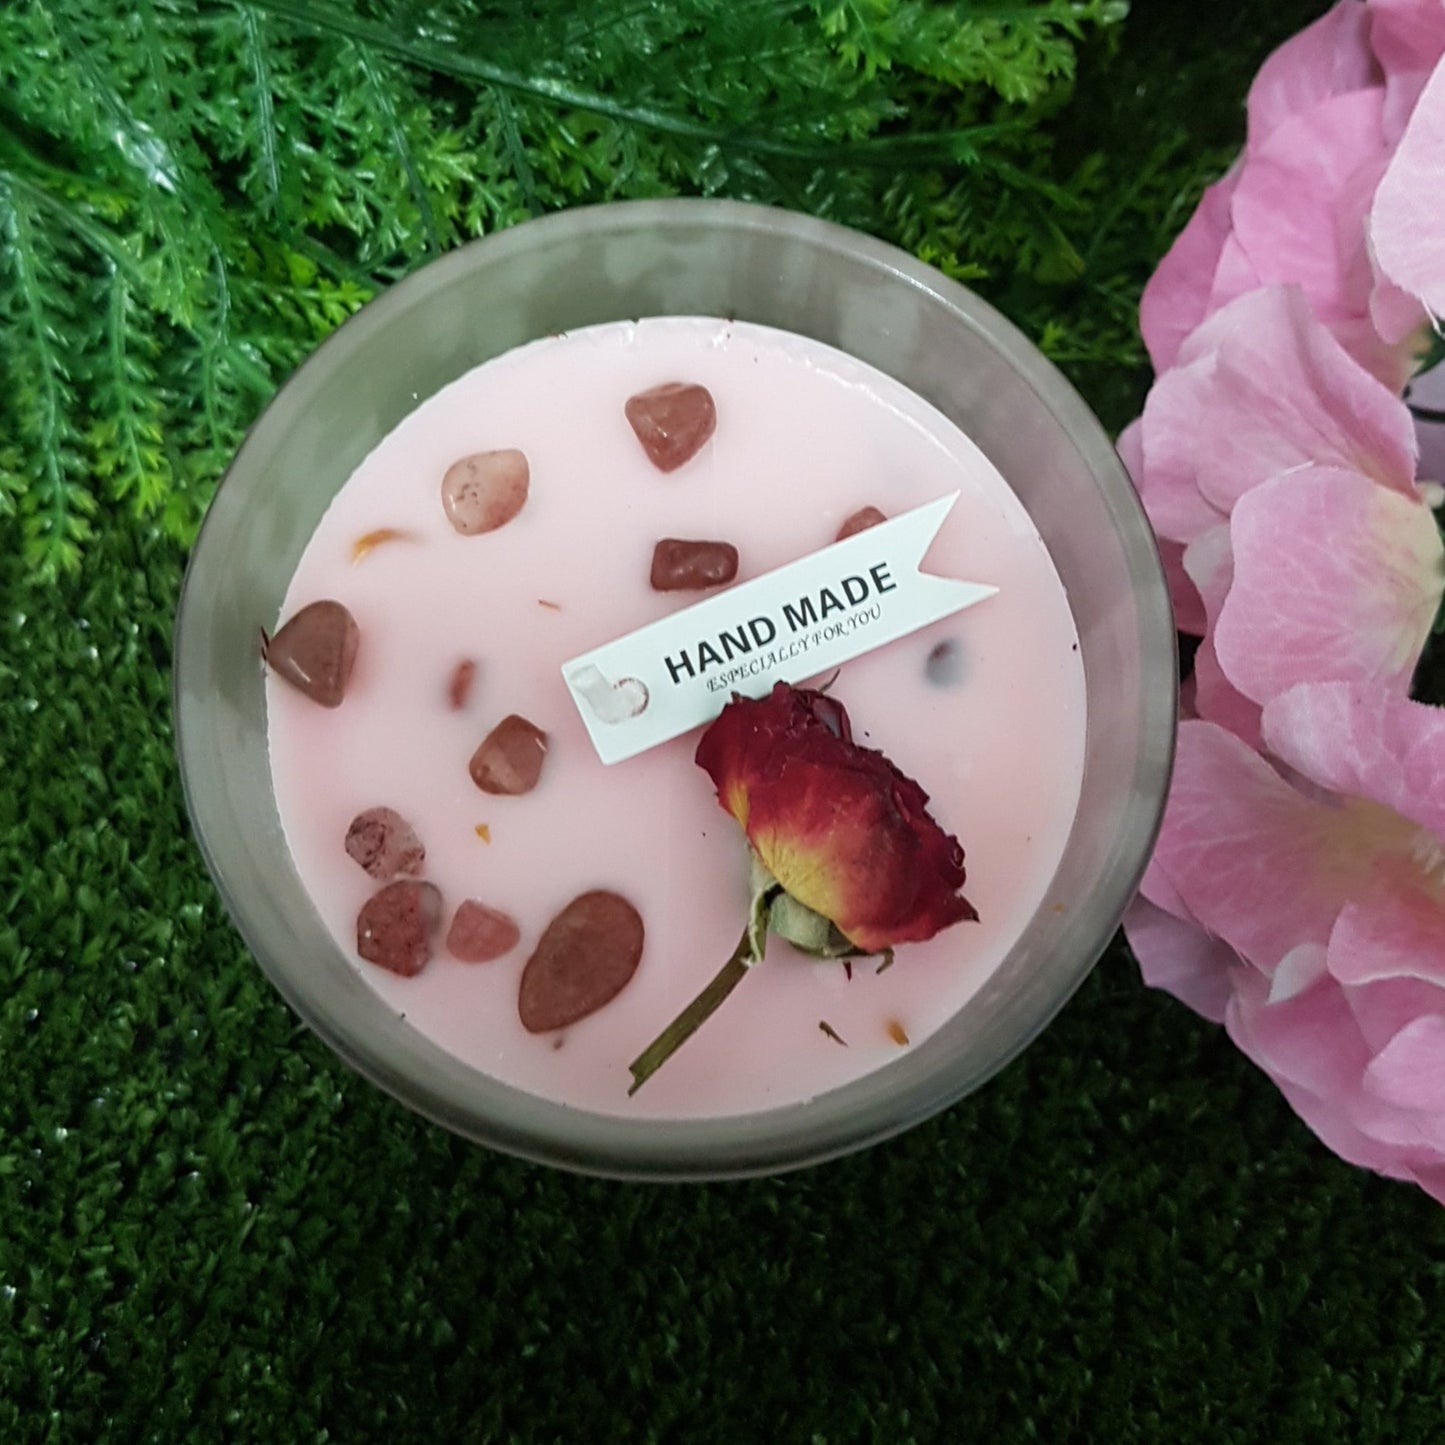 Handmade Rose Quartz Crystal Infused Candle